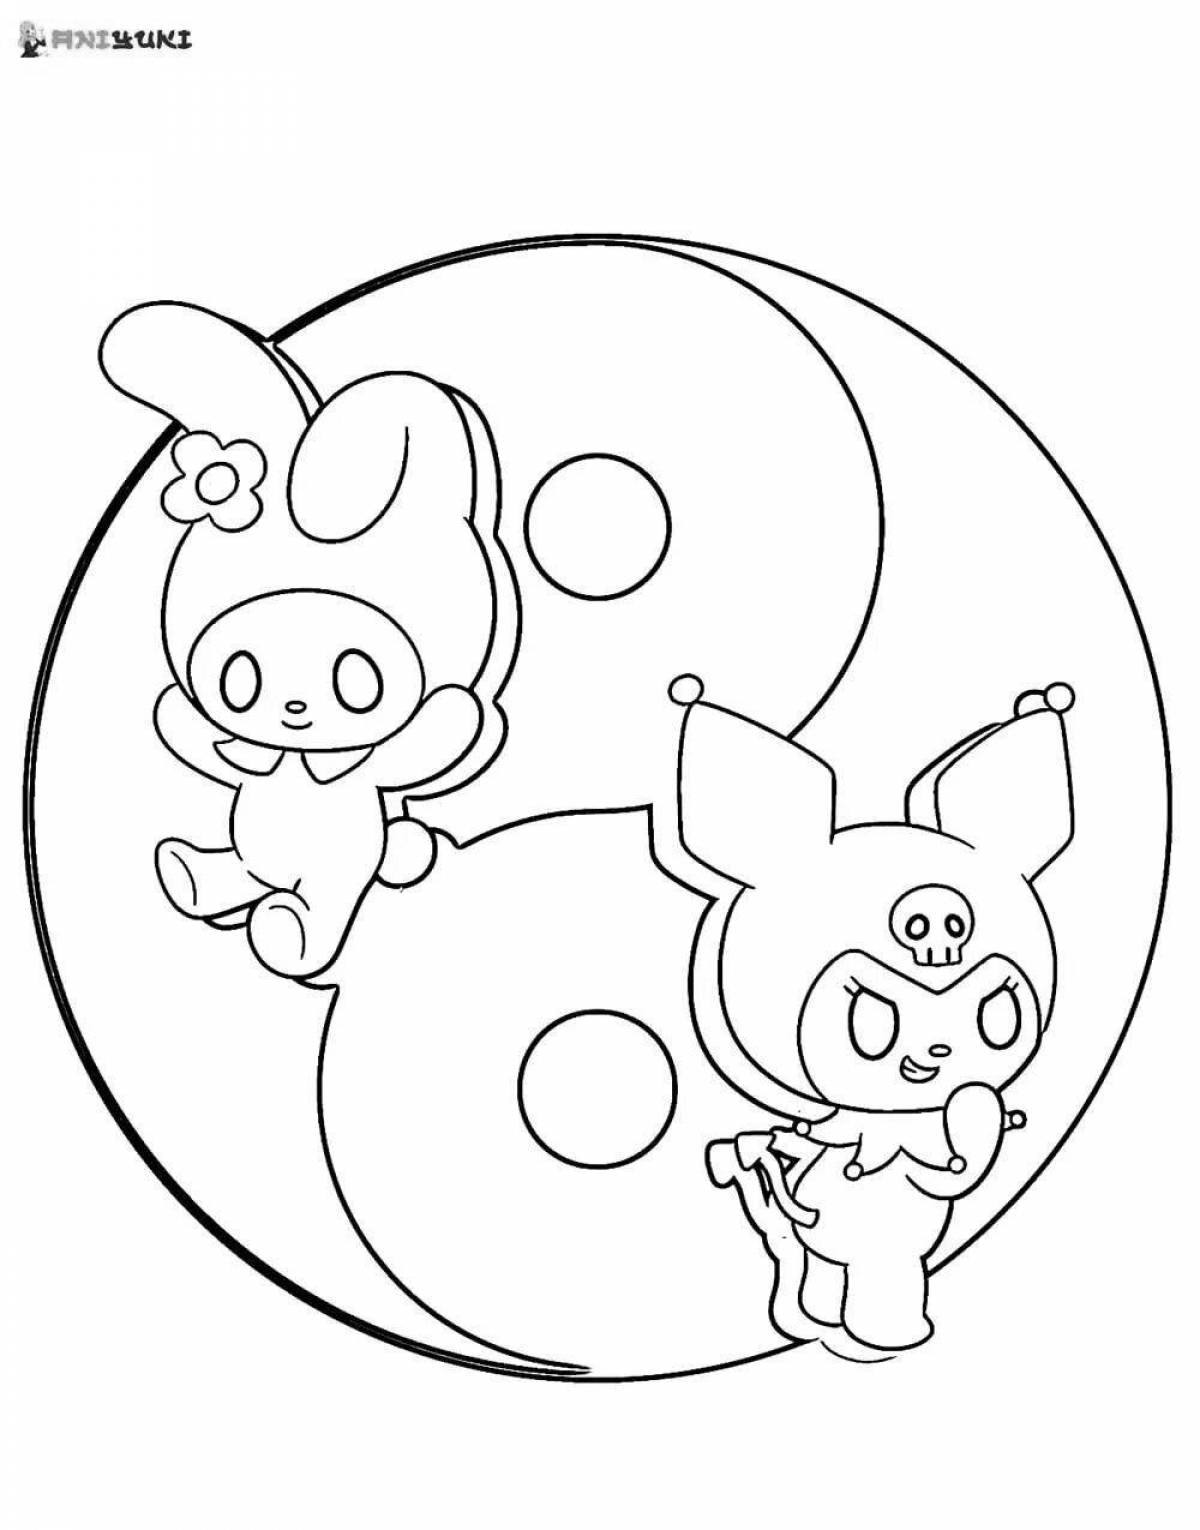 Radiant Kurumi and Mai Melody coloring page